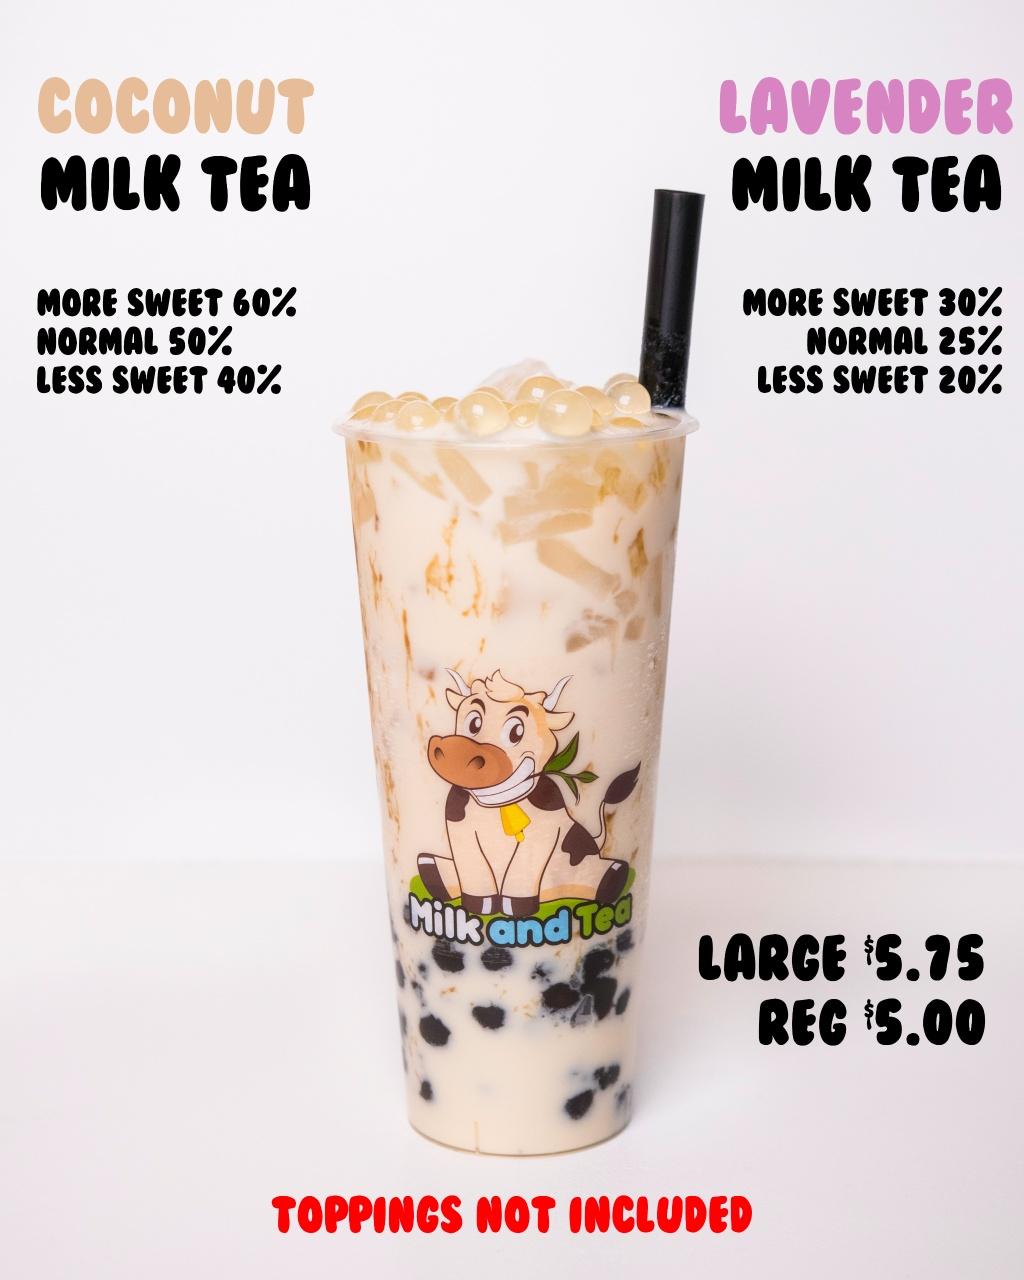 Image for Lychee Milk Tea.